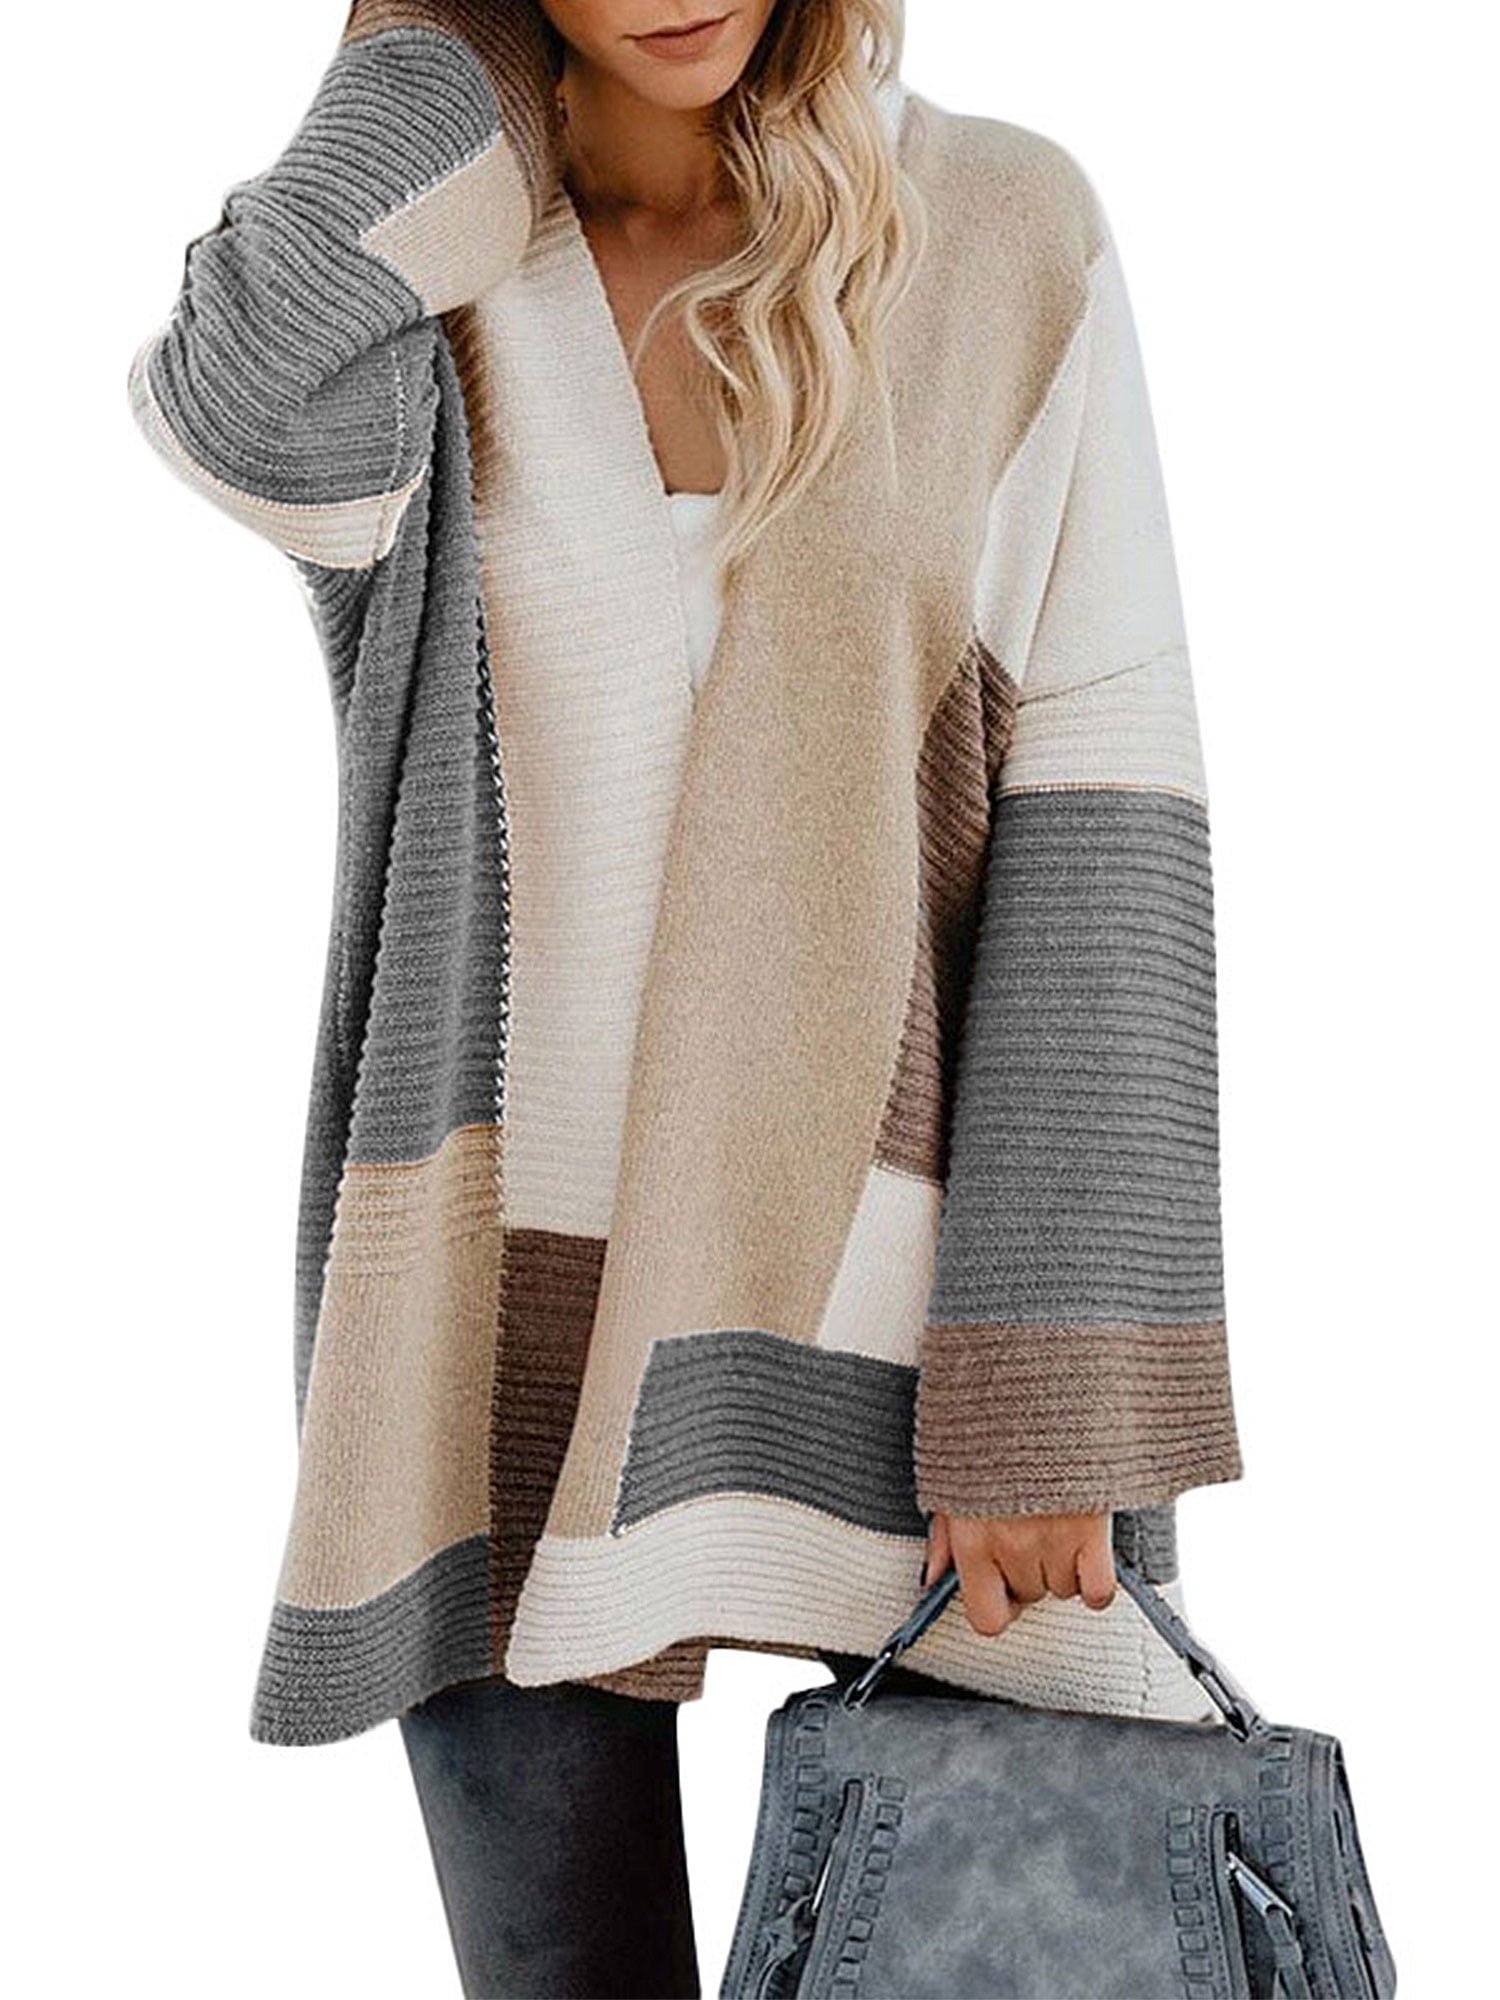 Women Cardigan Long Sleeve Knitted Sweater Outwear Casual Loose Jacket Coat Tops